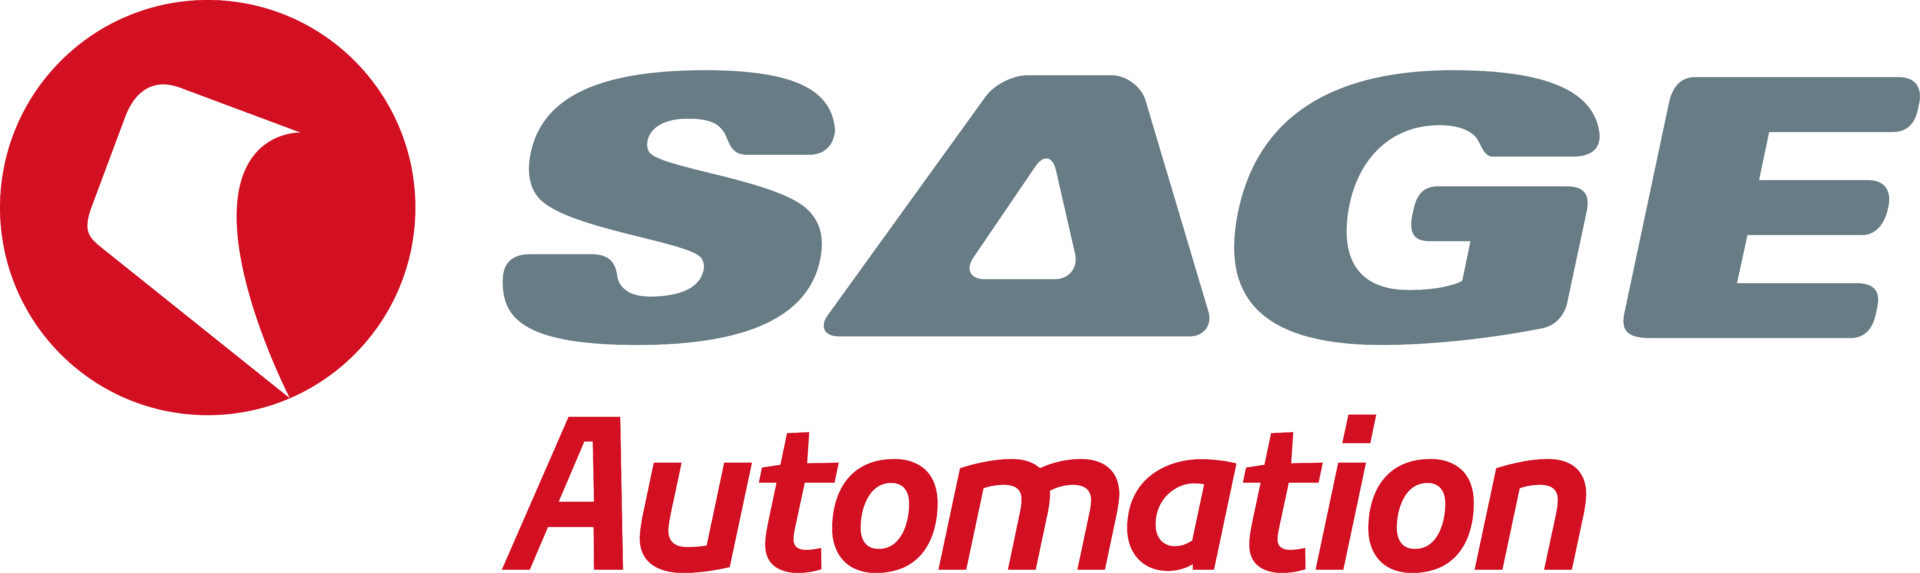 SAGE Automation - Logo